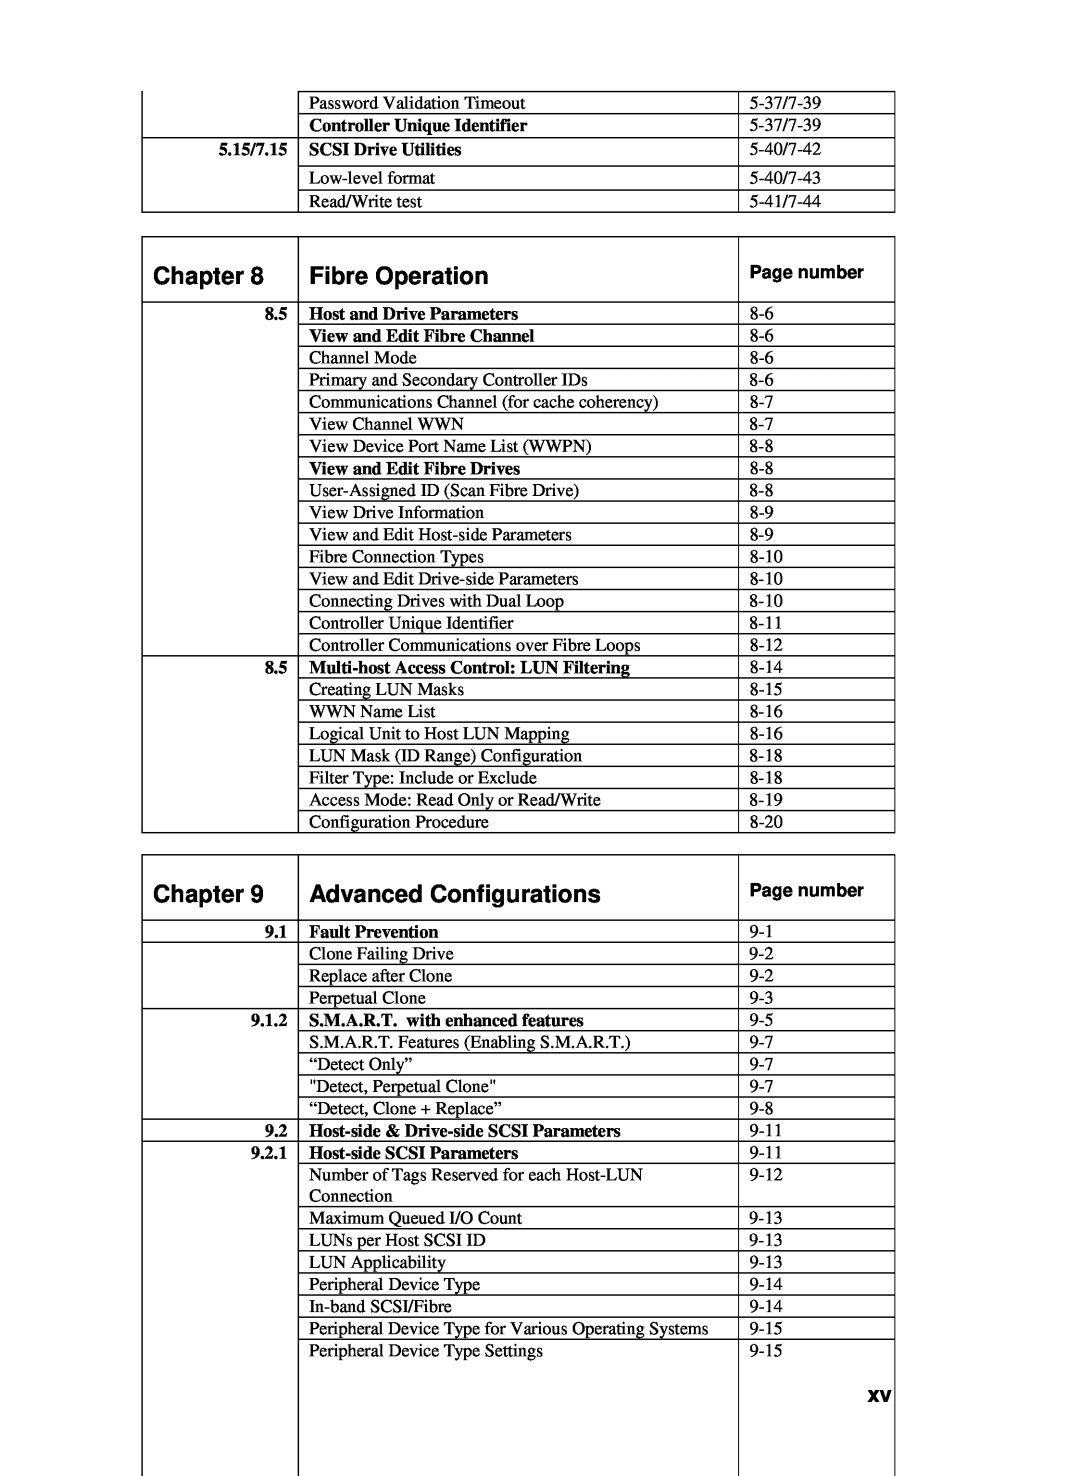 Compaq Infortrend manual Fibre Operation, Advanced Configurations, Chapter 